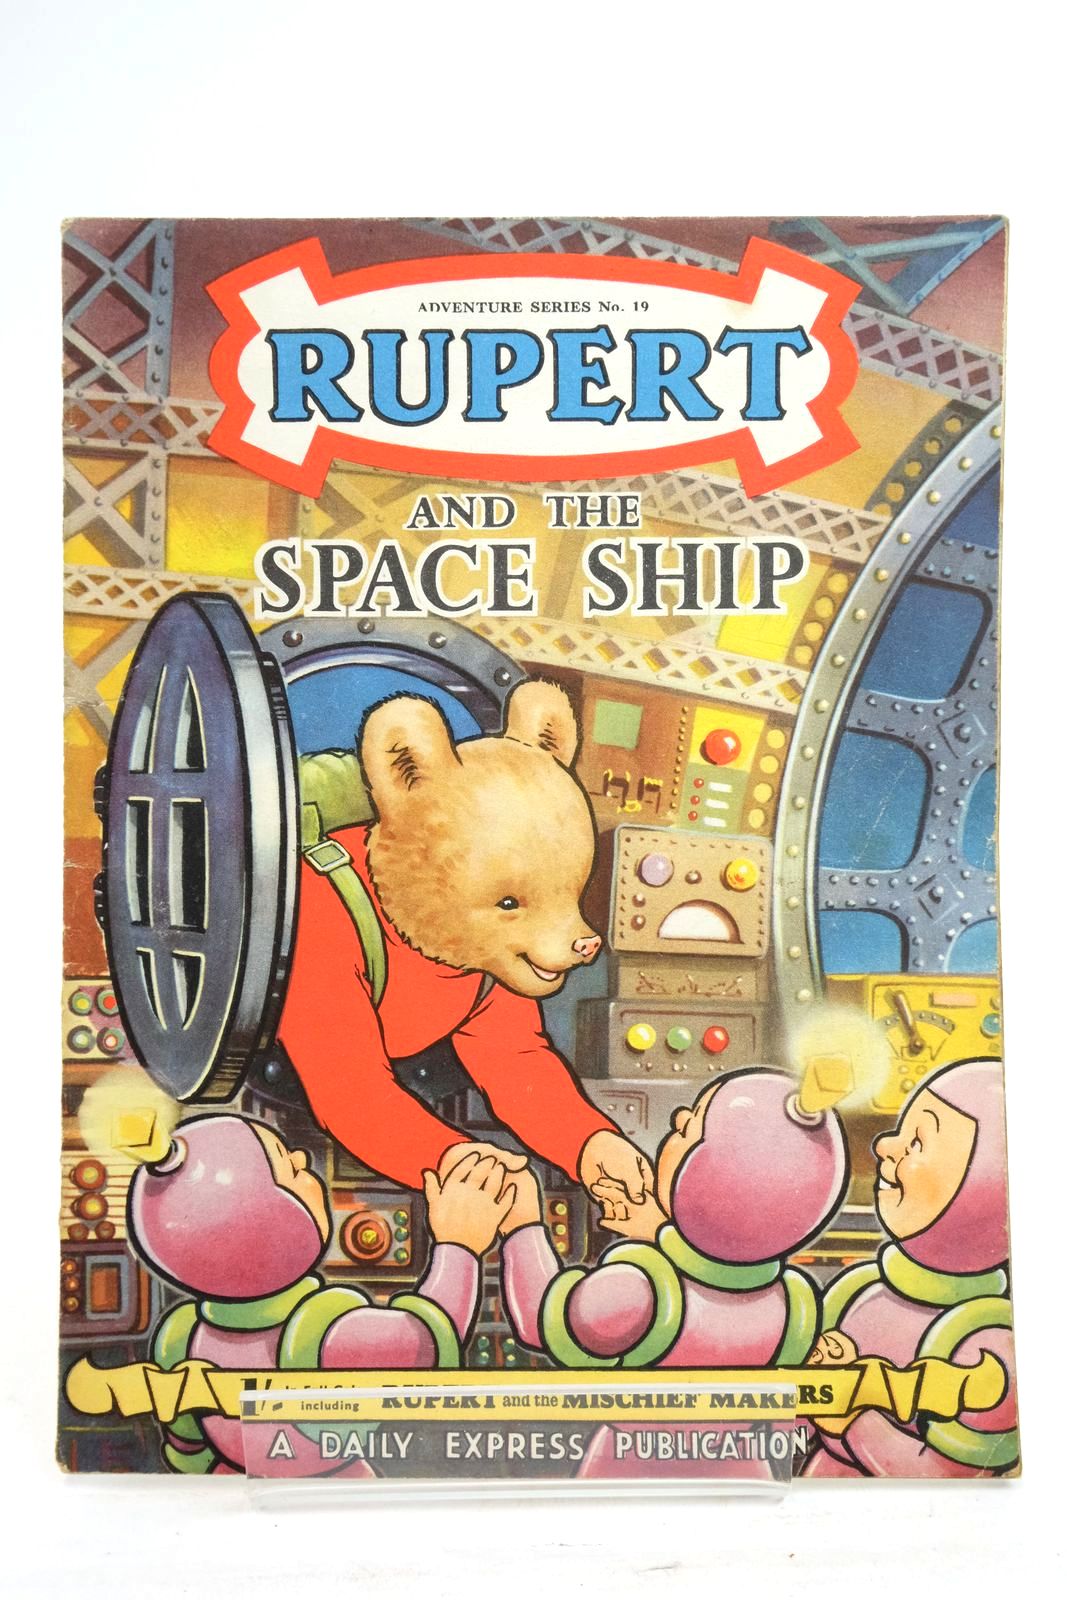 Rupert Adventure Series No. 19 - Rupert and The Space Ship